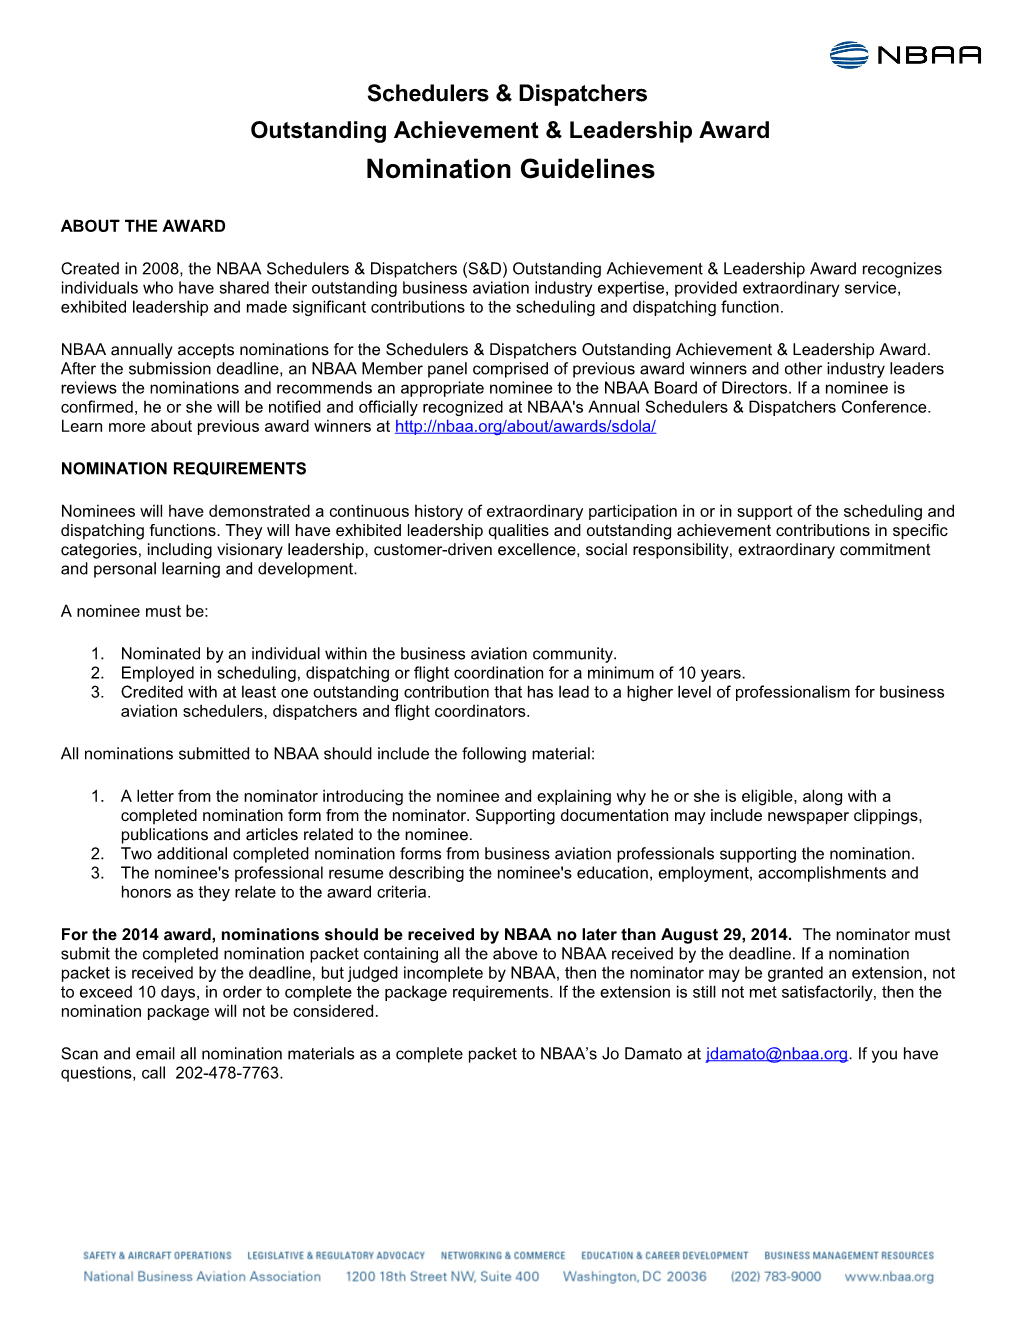 NBAA S&D Outstanding Achievement & Leadership Award Nomination Form